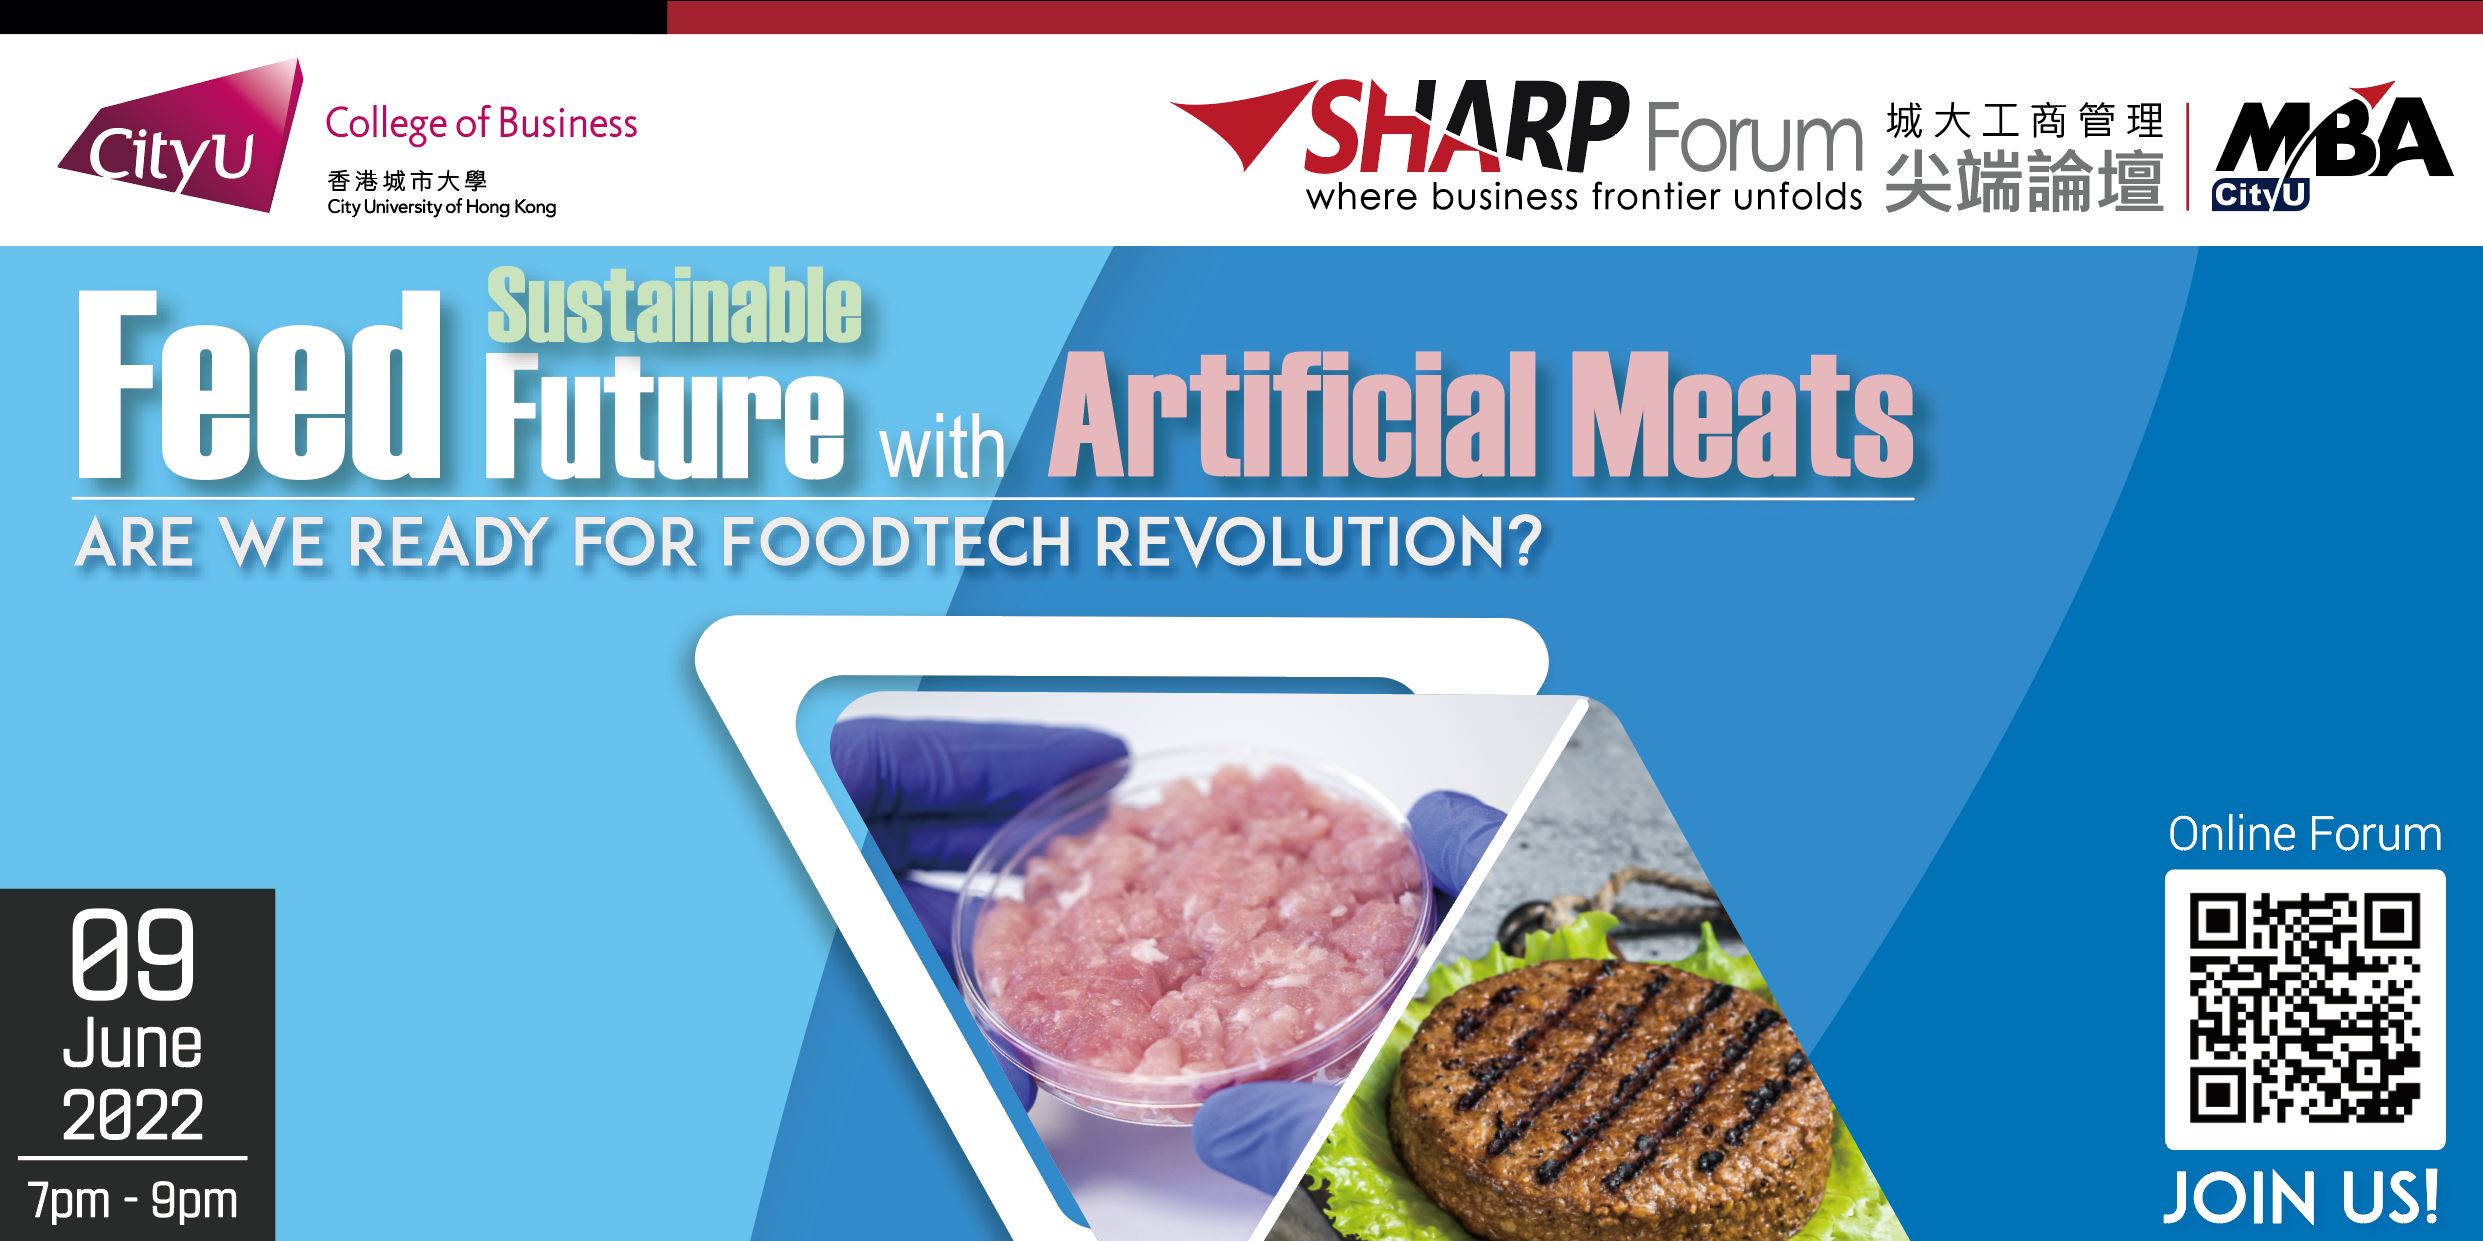 Artificial Meats